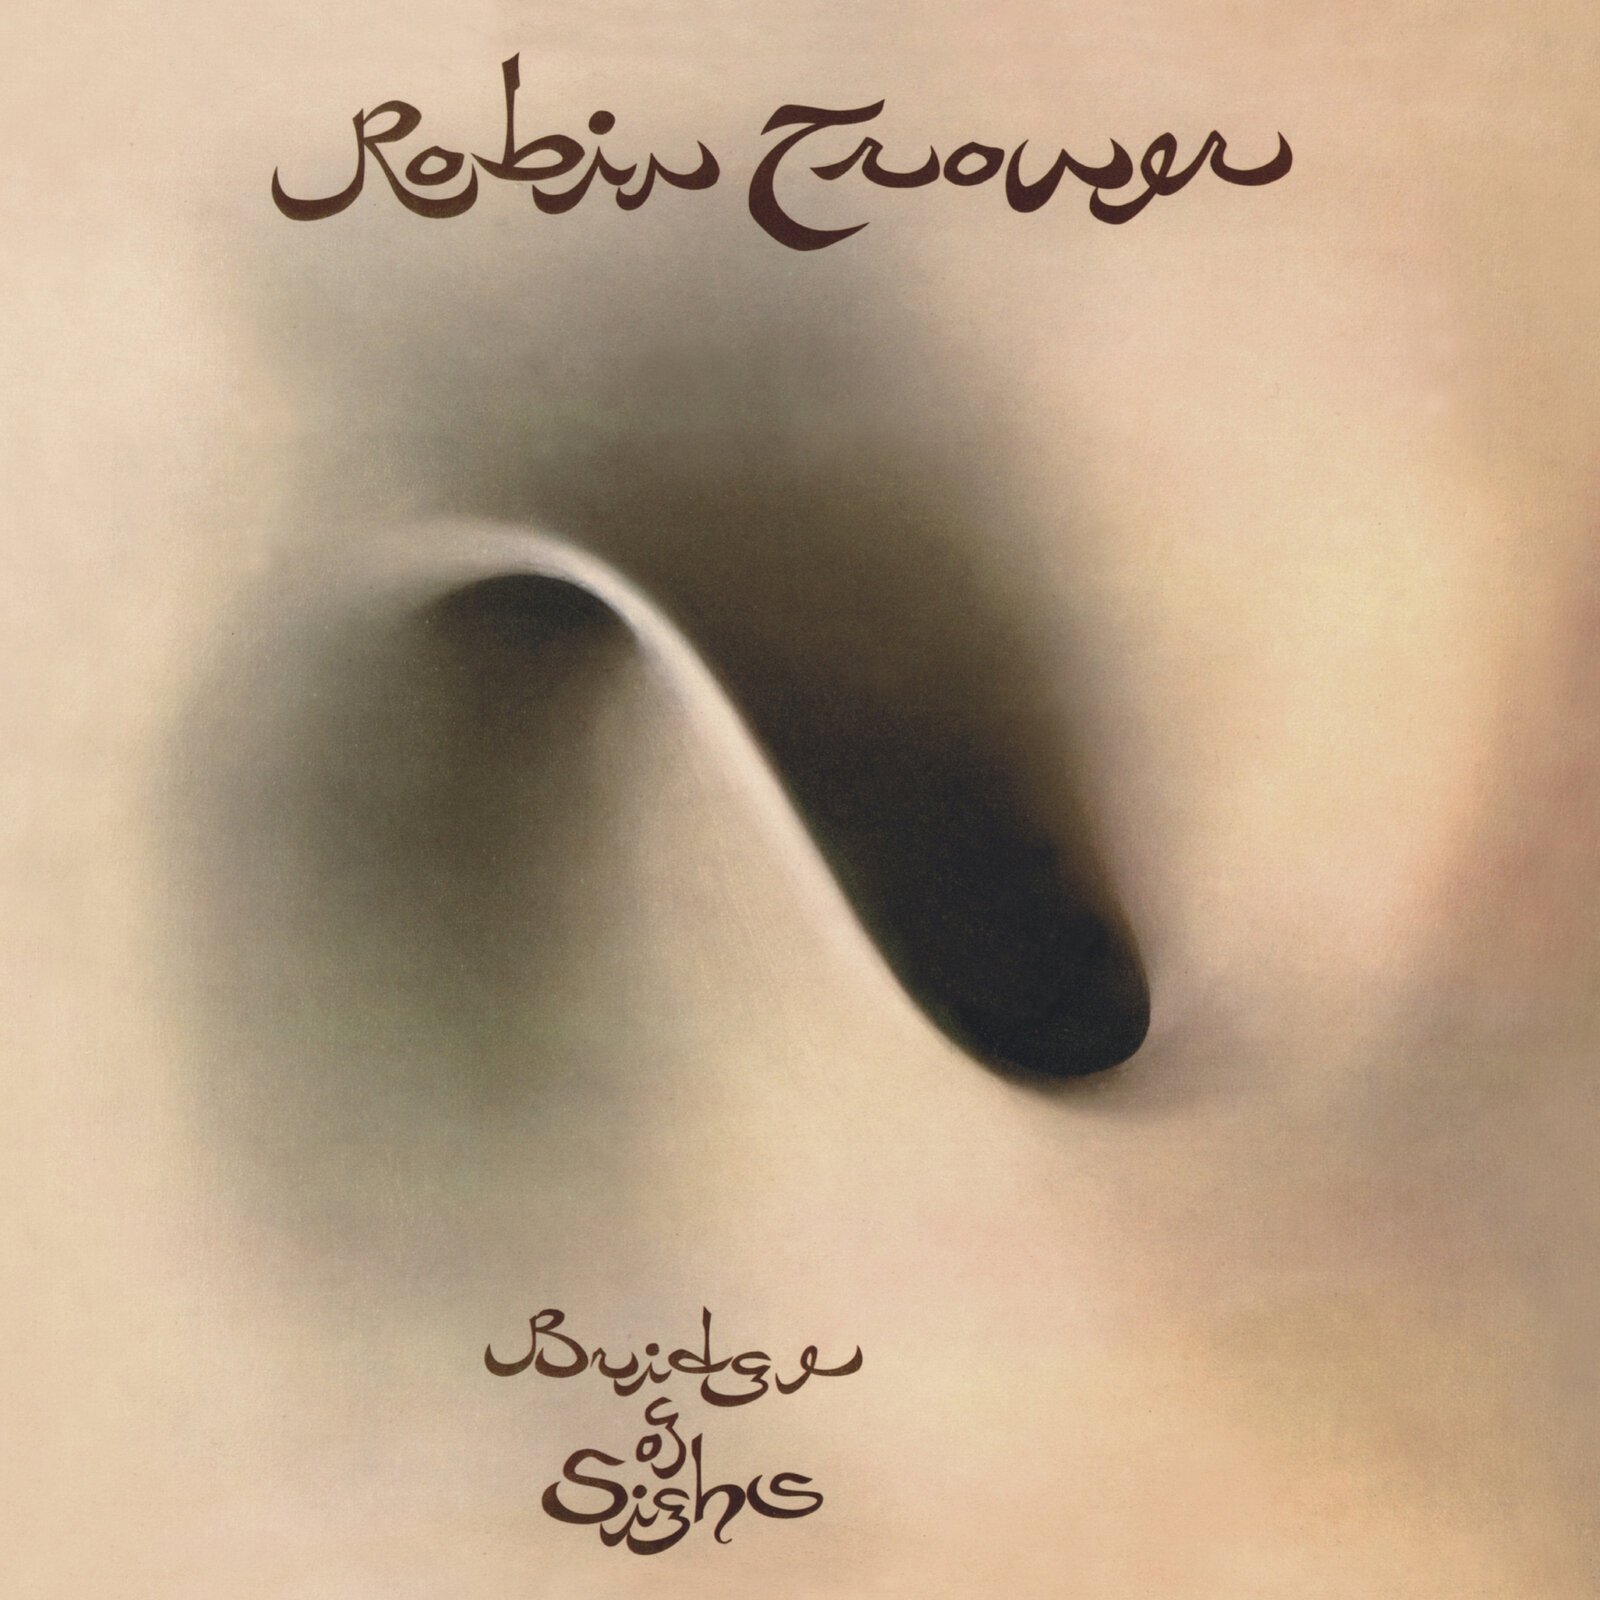 Robin Trower - Bridge of Sighs (50th Anniversary Edition) (High Quality) (2 LP) Robin Trower